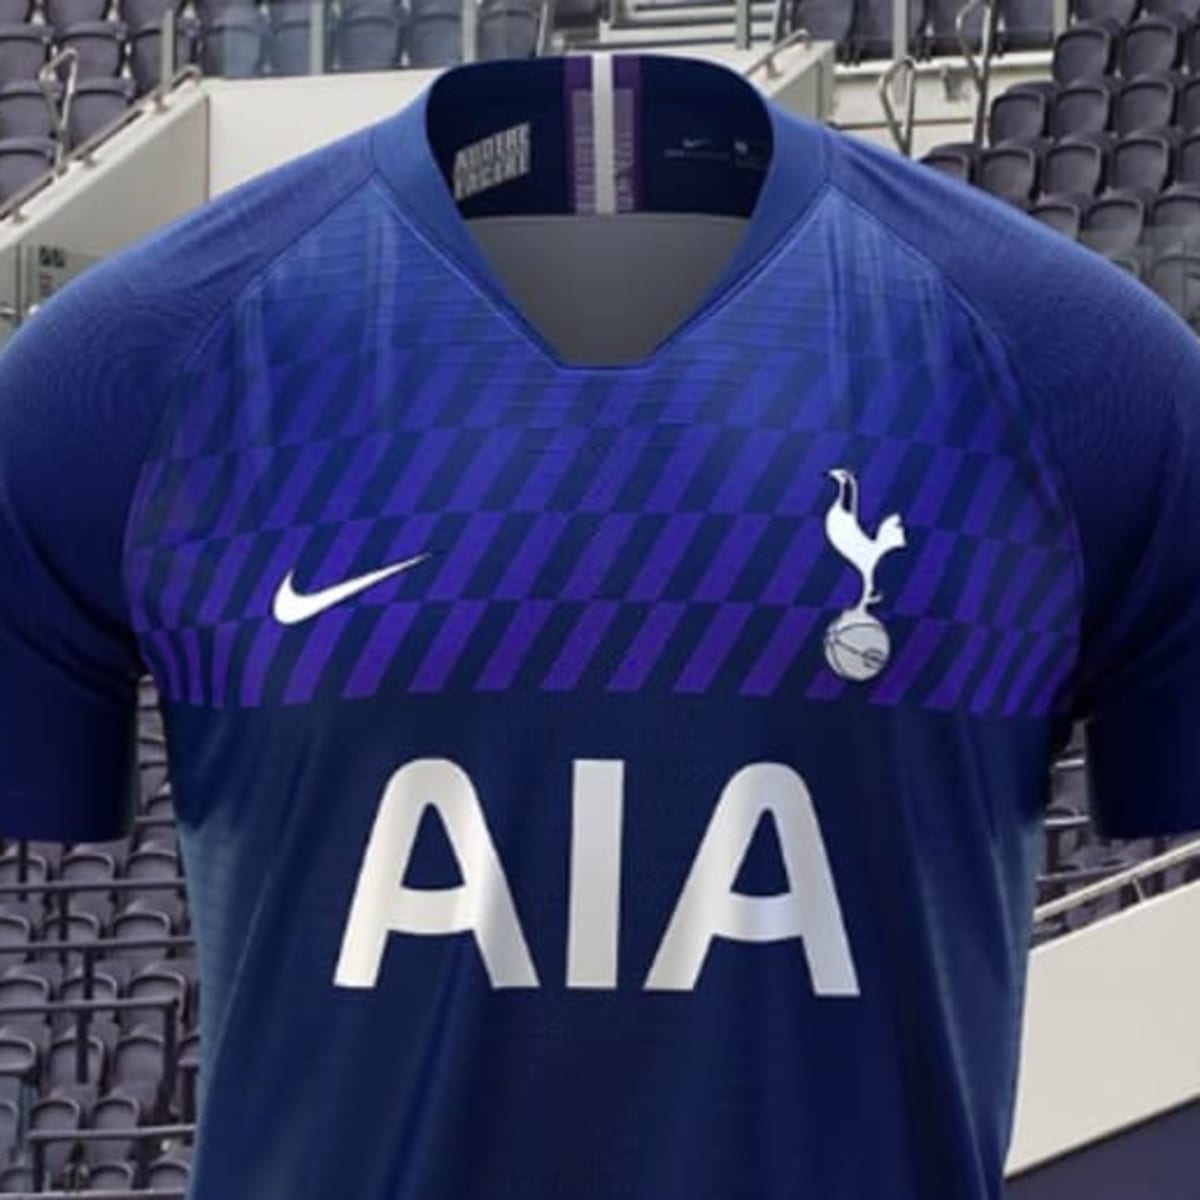 New Tottenham home and away kits 2019-20: Harry Kane and Dele Alli